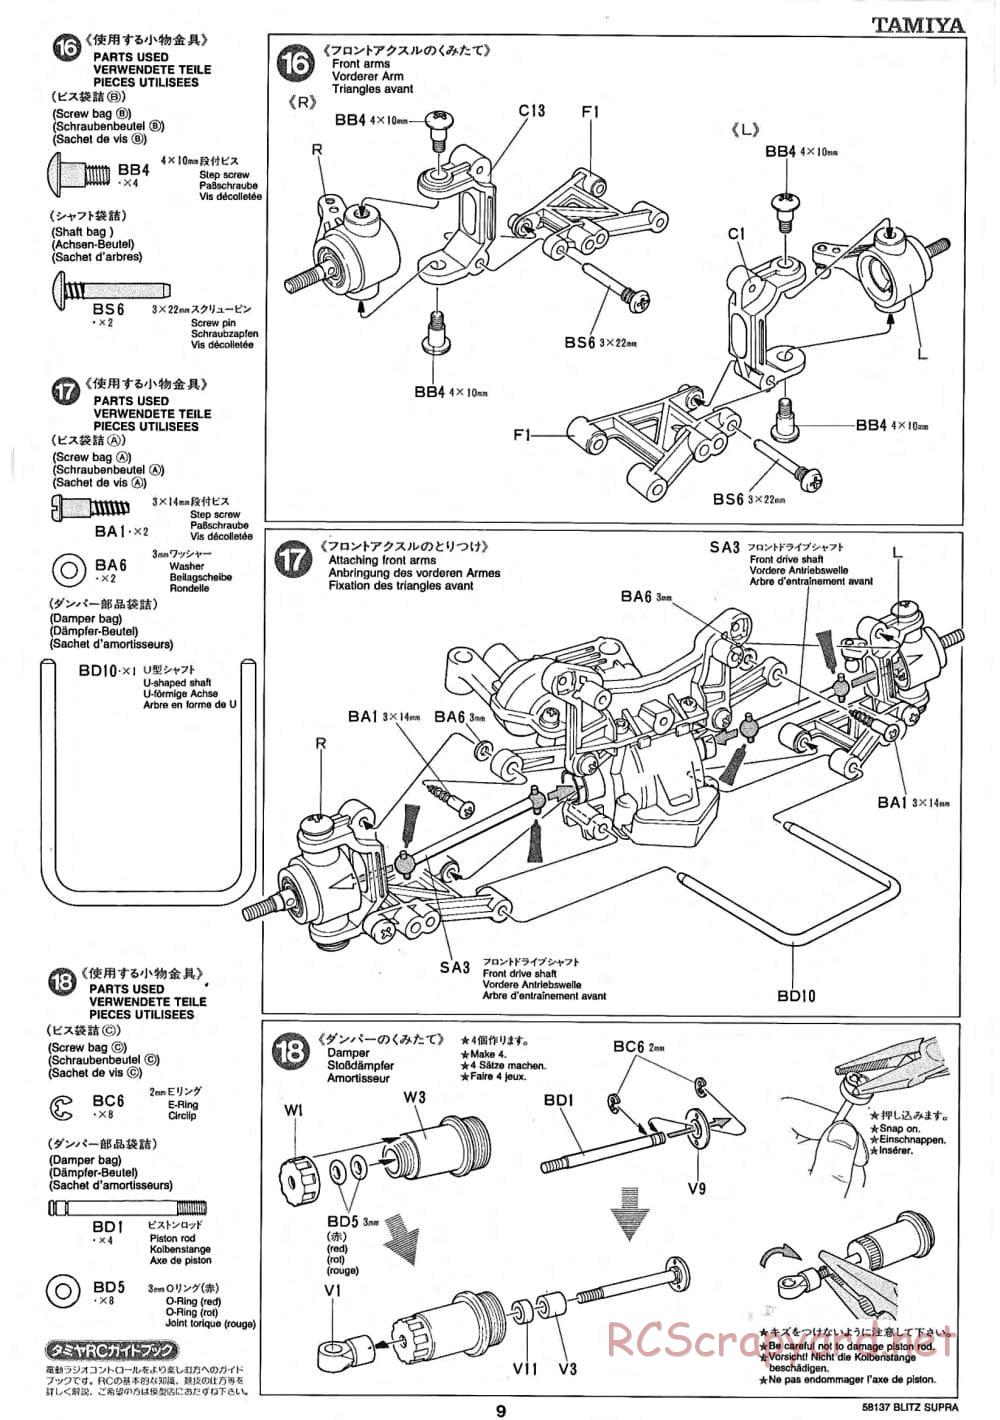 Tamiya - Blitz Toyota Supra Gr.N - TA-02 Chassis - Manual - Page 9